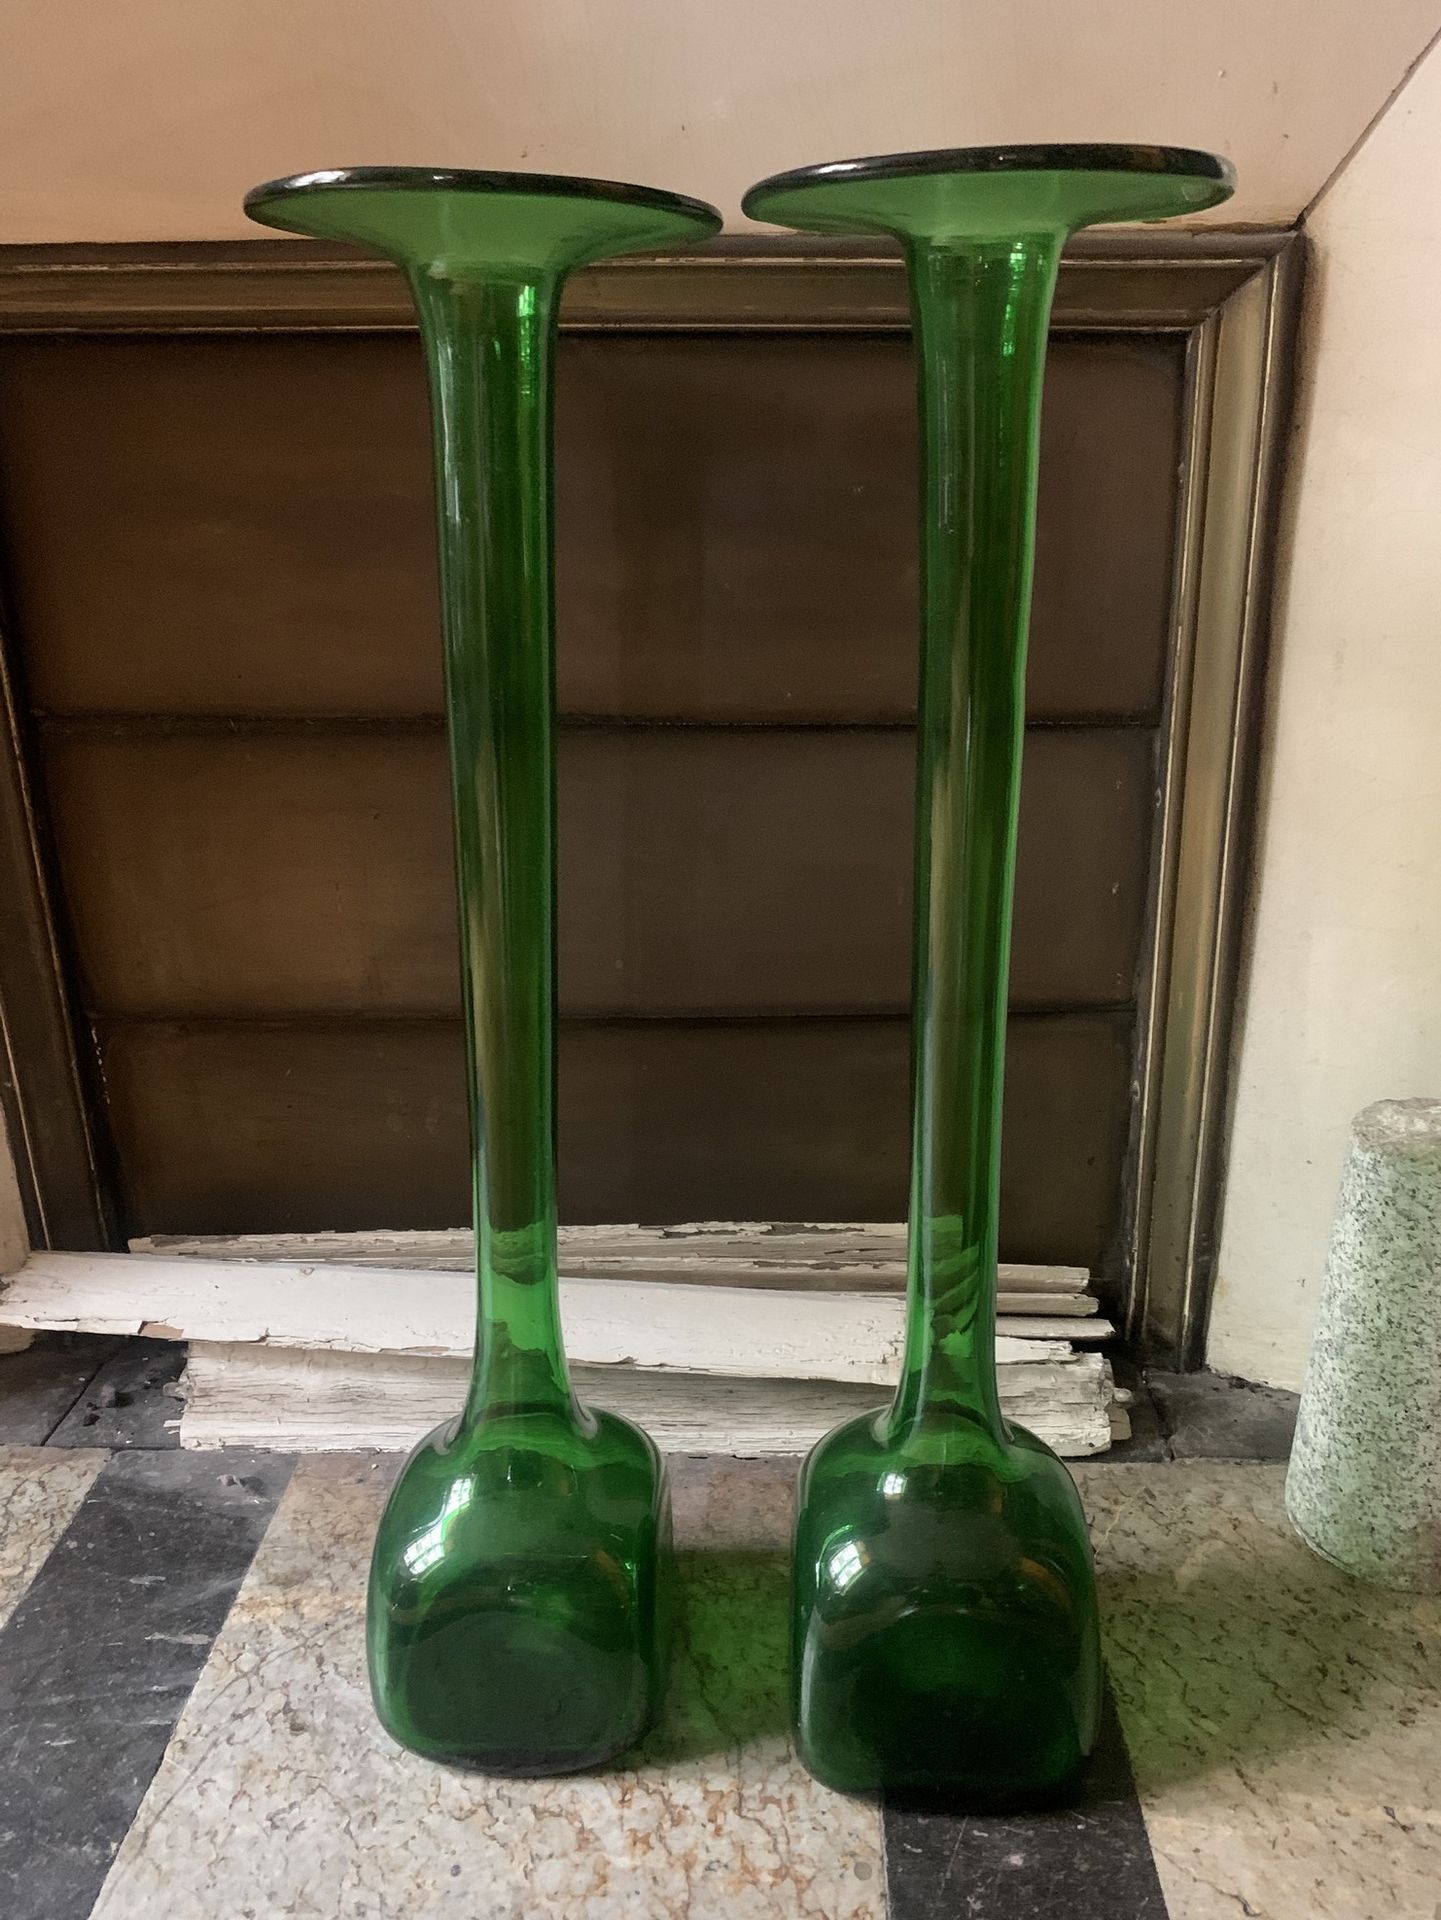 Null 两个绿色玻璃Soliflores花瓶，方形底座和两个青花瓷花盆。

无目录销售。以最优惠的价格出售--无保留价。